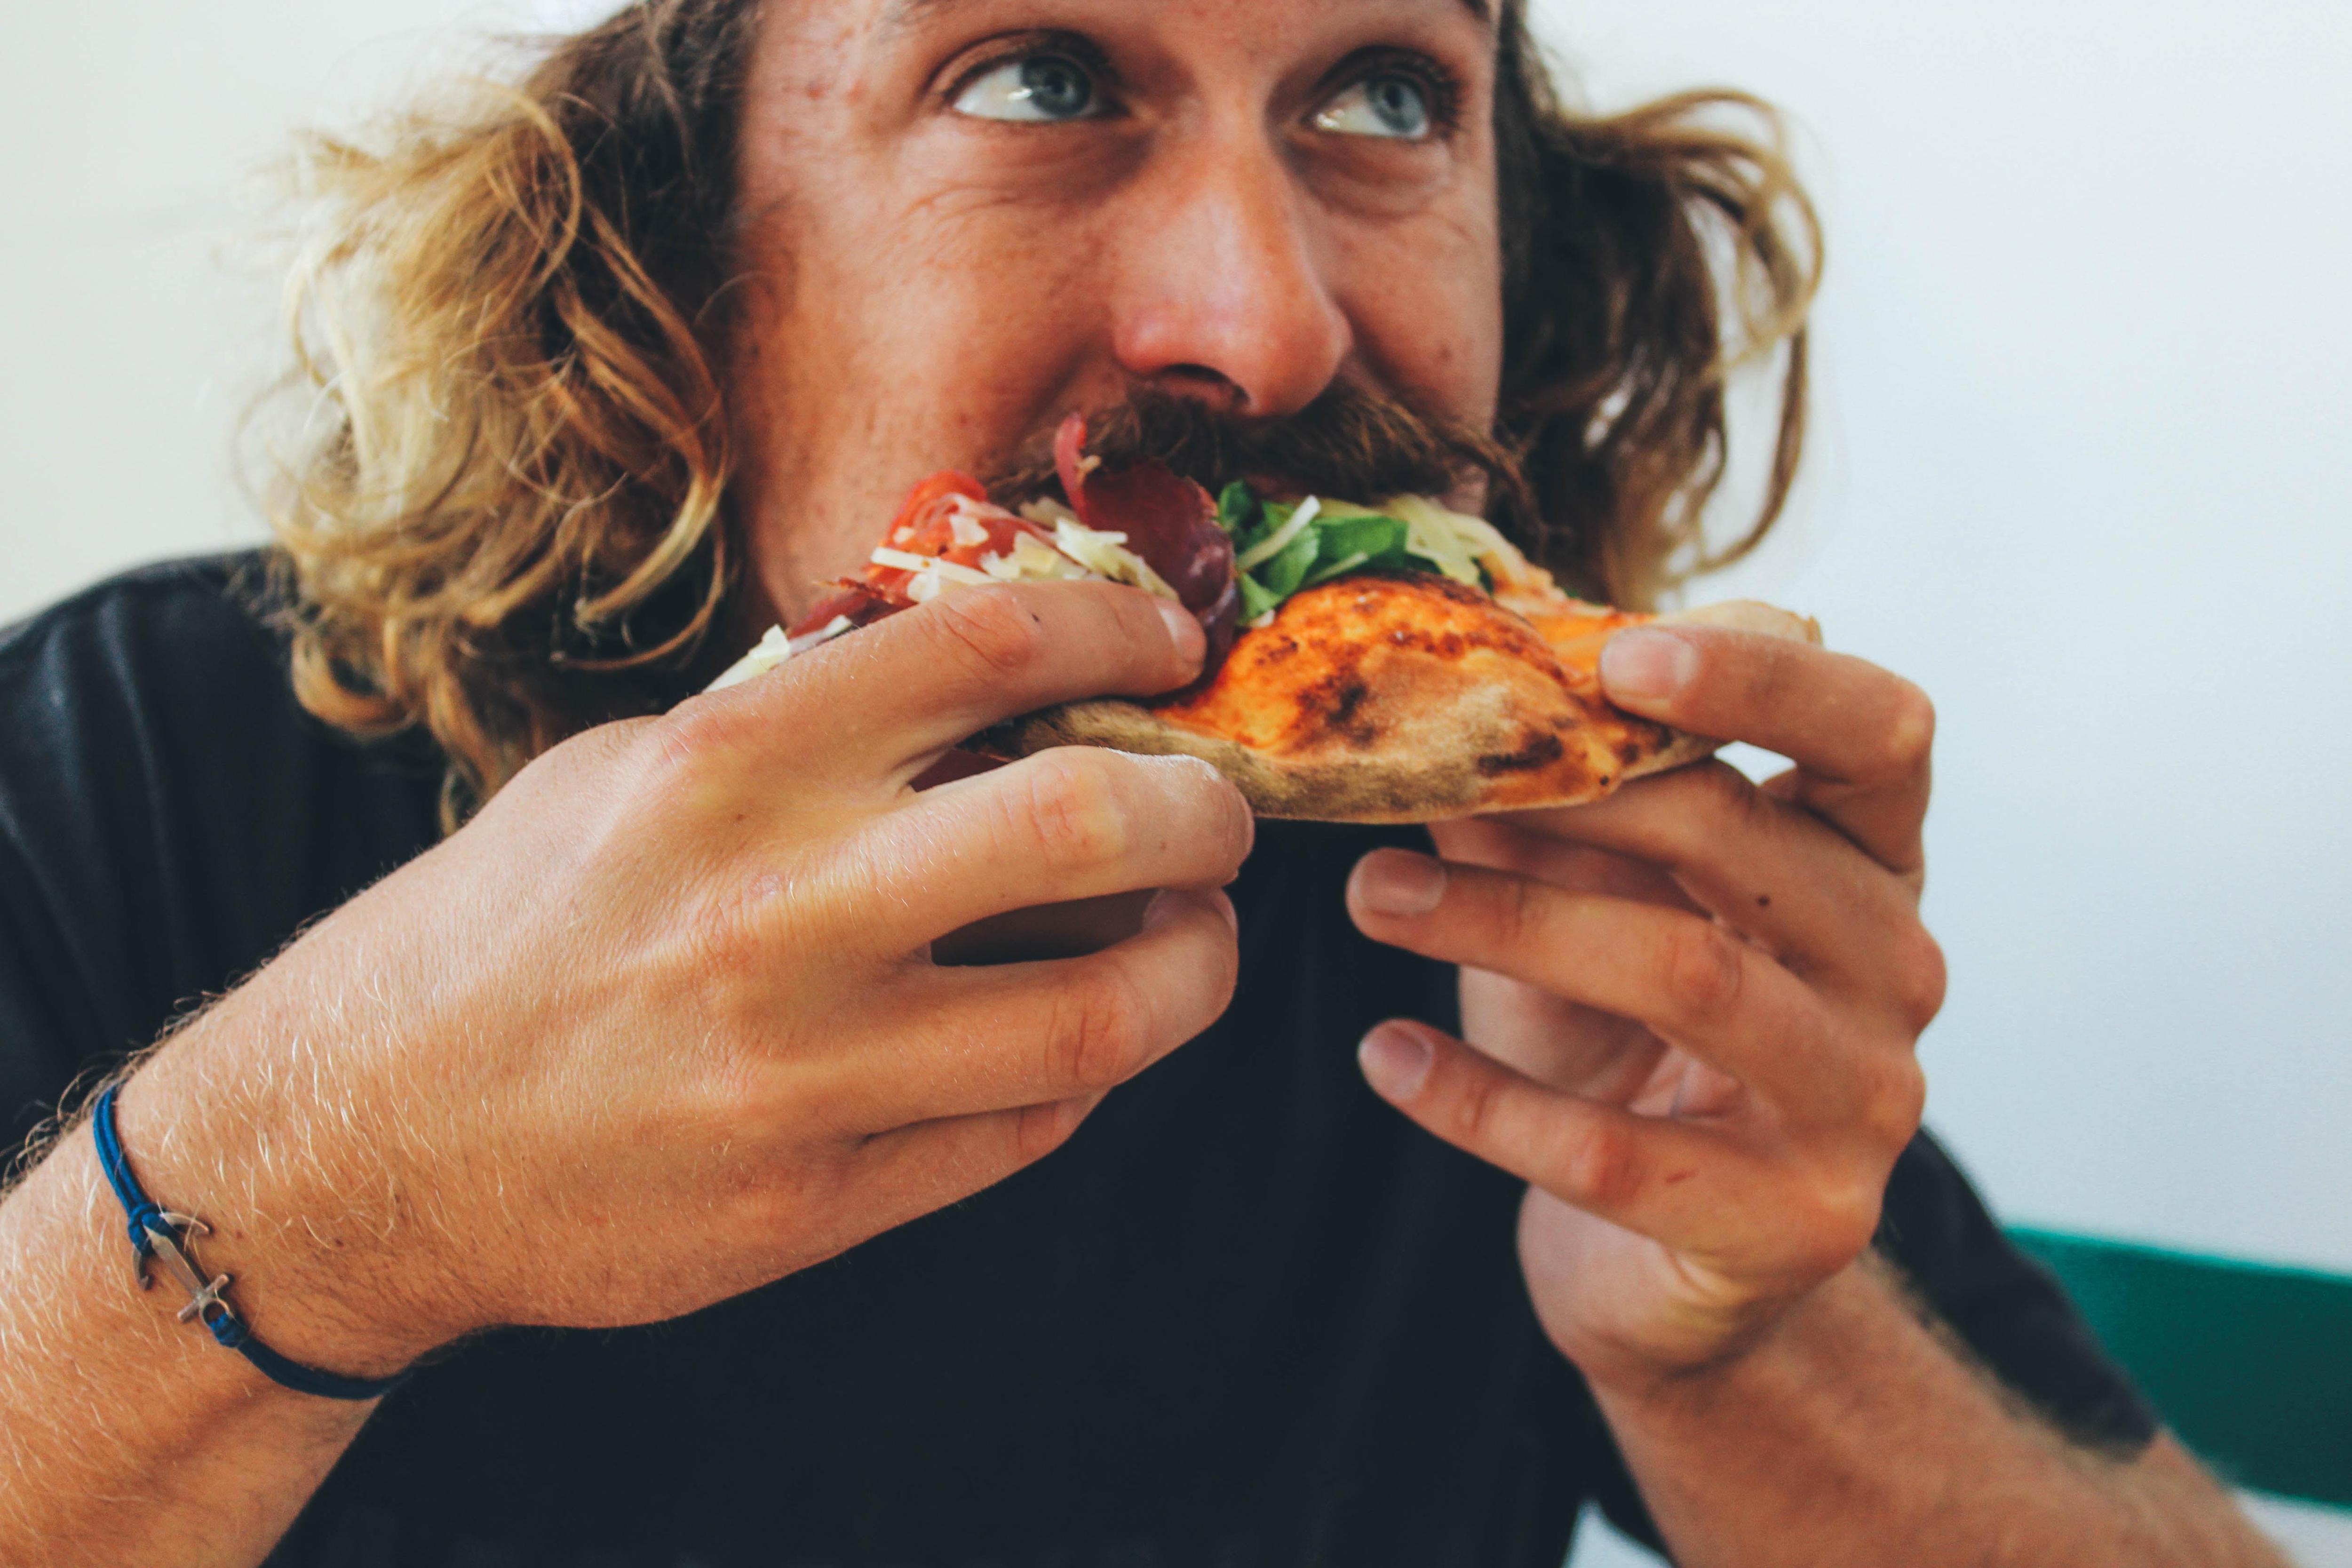 Муж ест руками. Человек ест. Люди едят в ресторане. Человек ест фото. Люди едят пиццу.